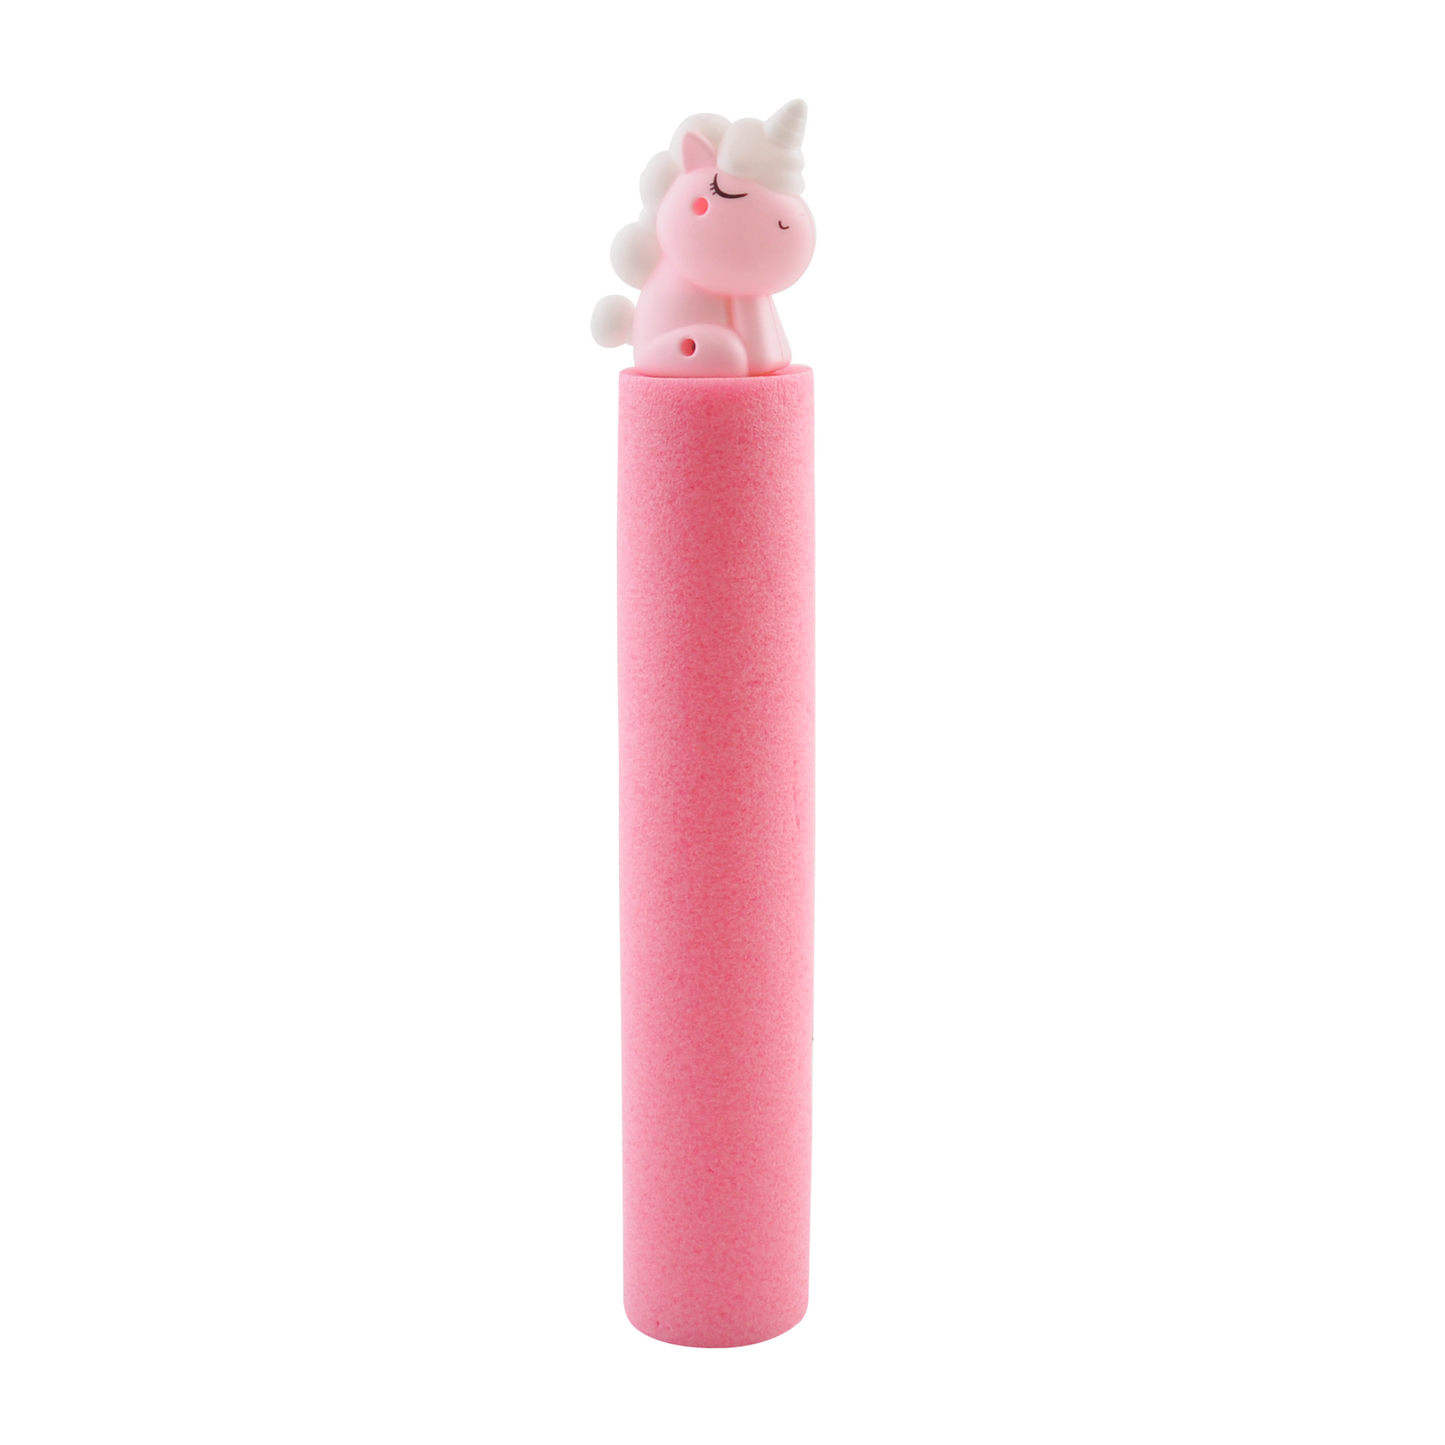 Foam Buddy Water Blaster - Pink Unicorn